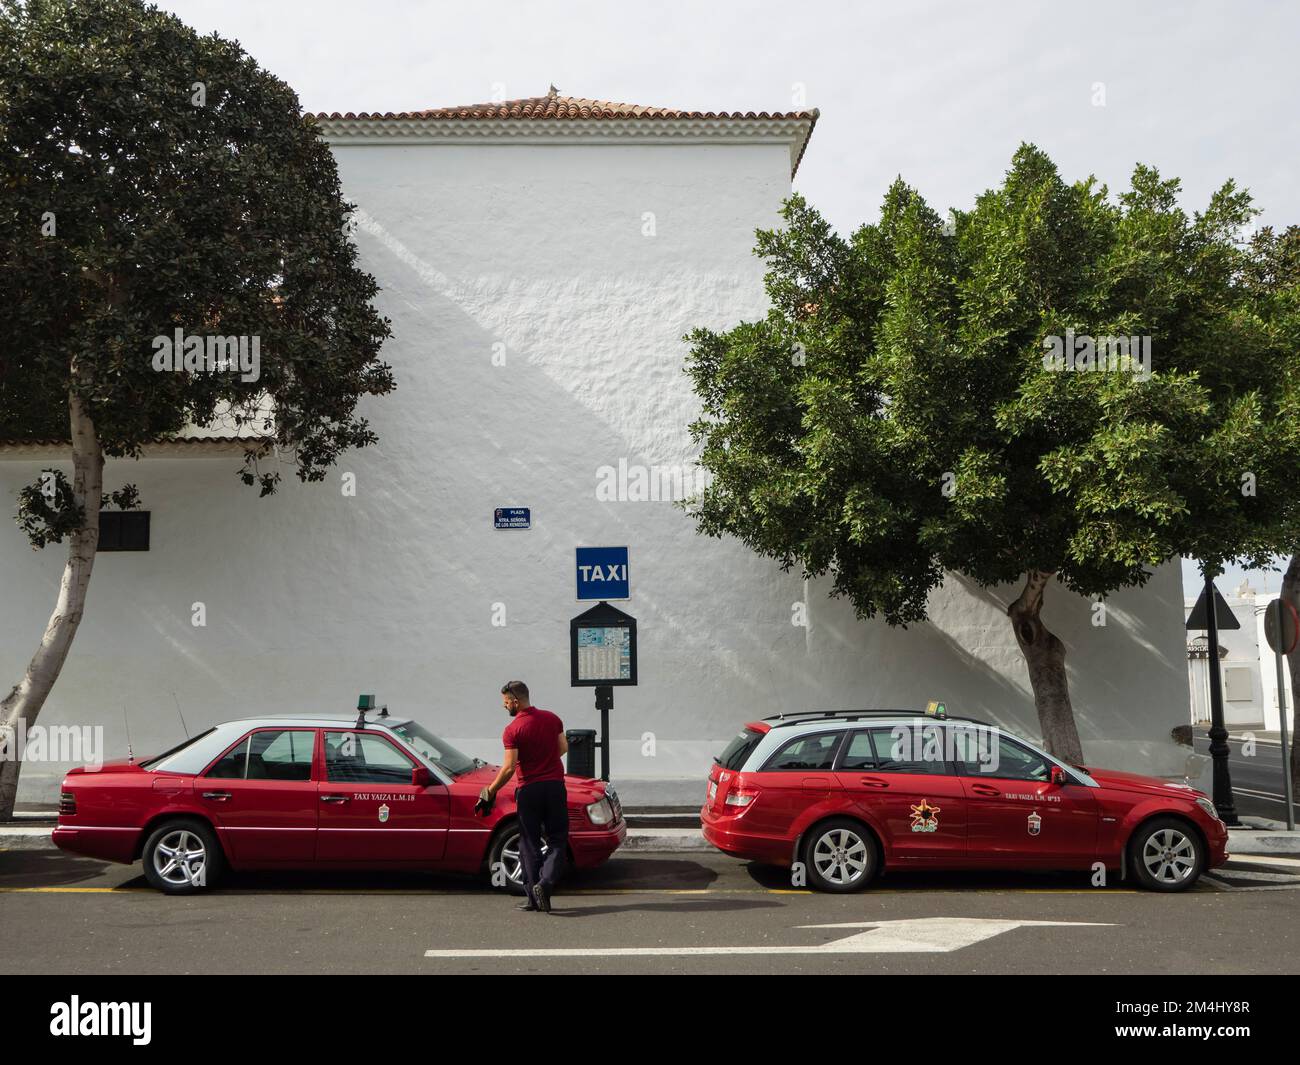 Taxi rank spain fotografías e imágenes de alta resolución - Alamy